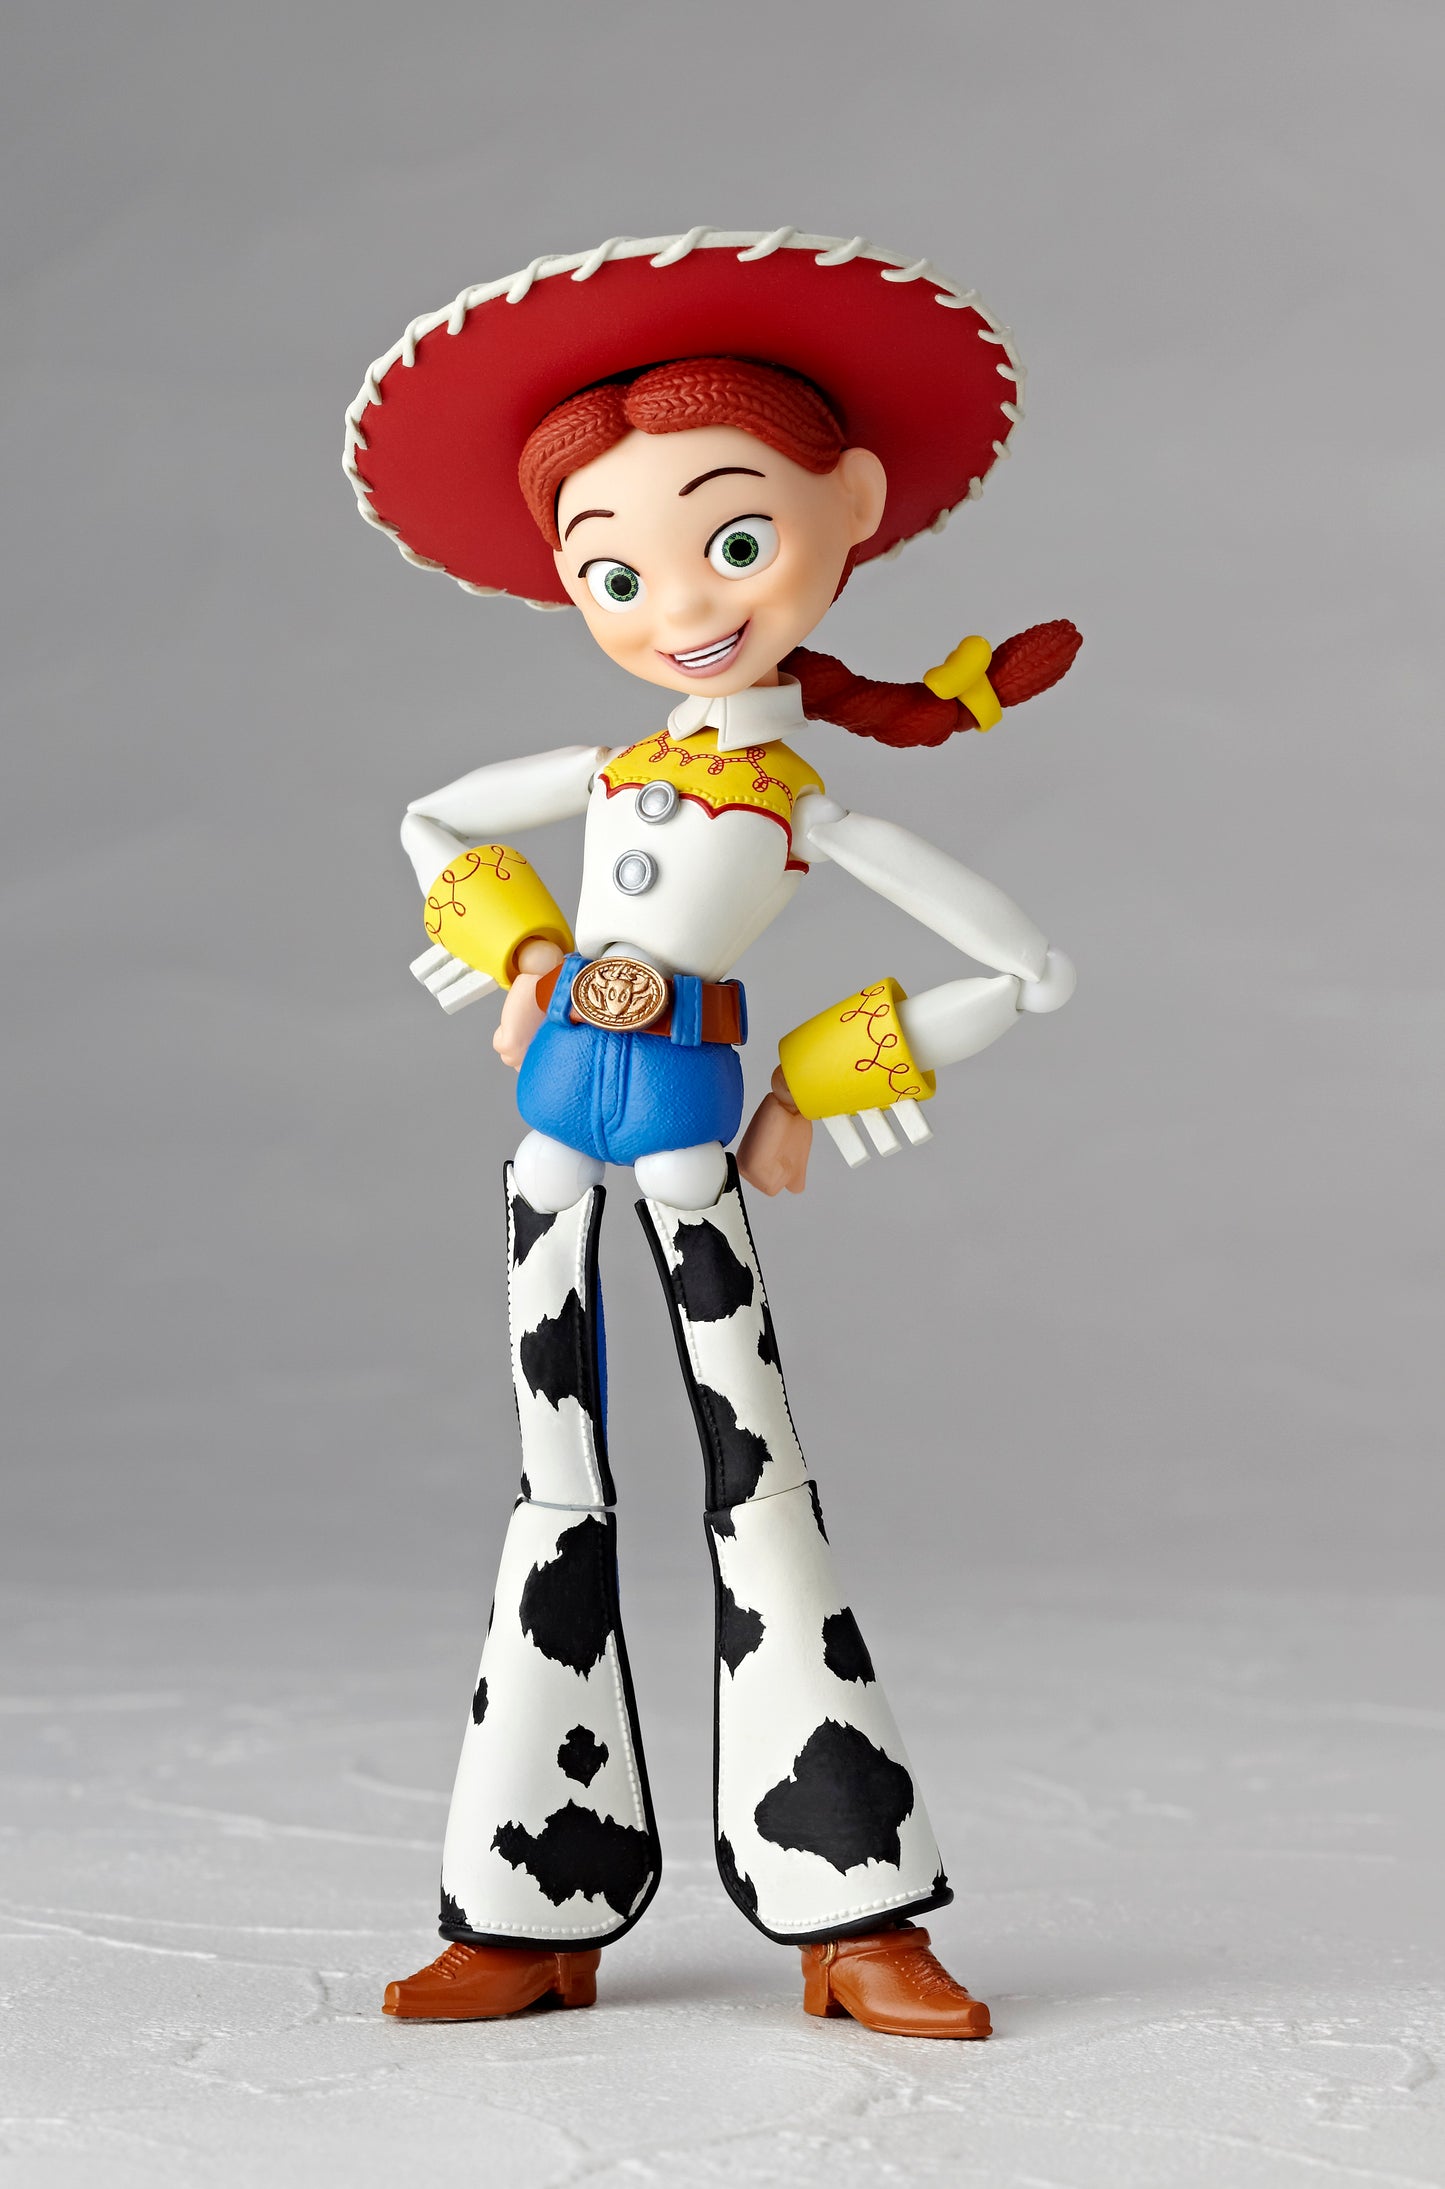 Revoltech "Toy Story" Jessie Ver. 1.5